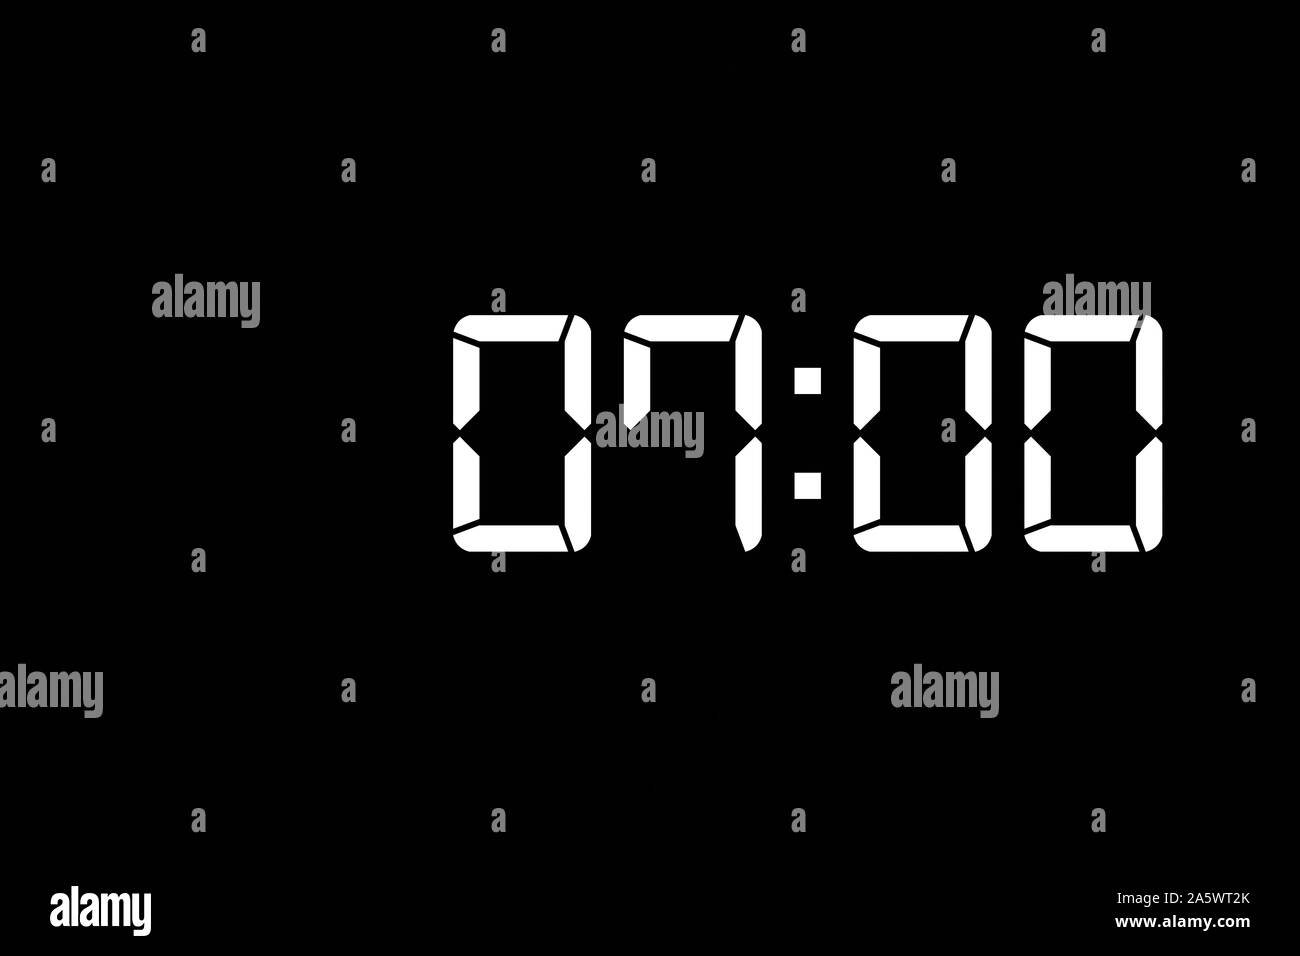 Showing time 07:00 on white led digital clock isolated black background Stock Photo